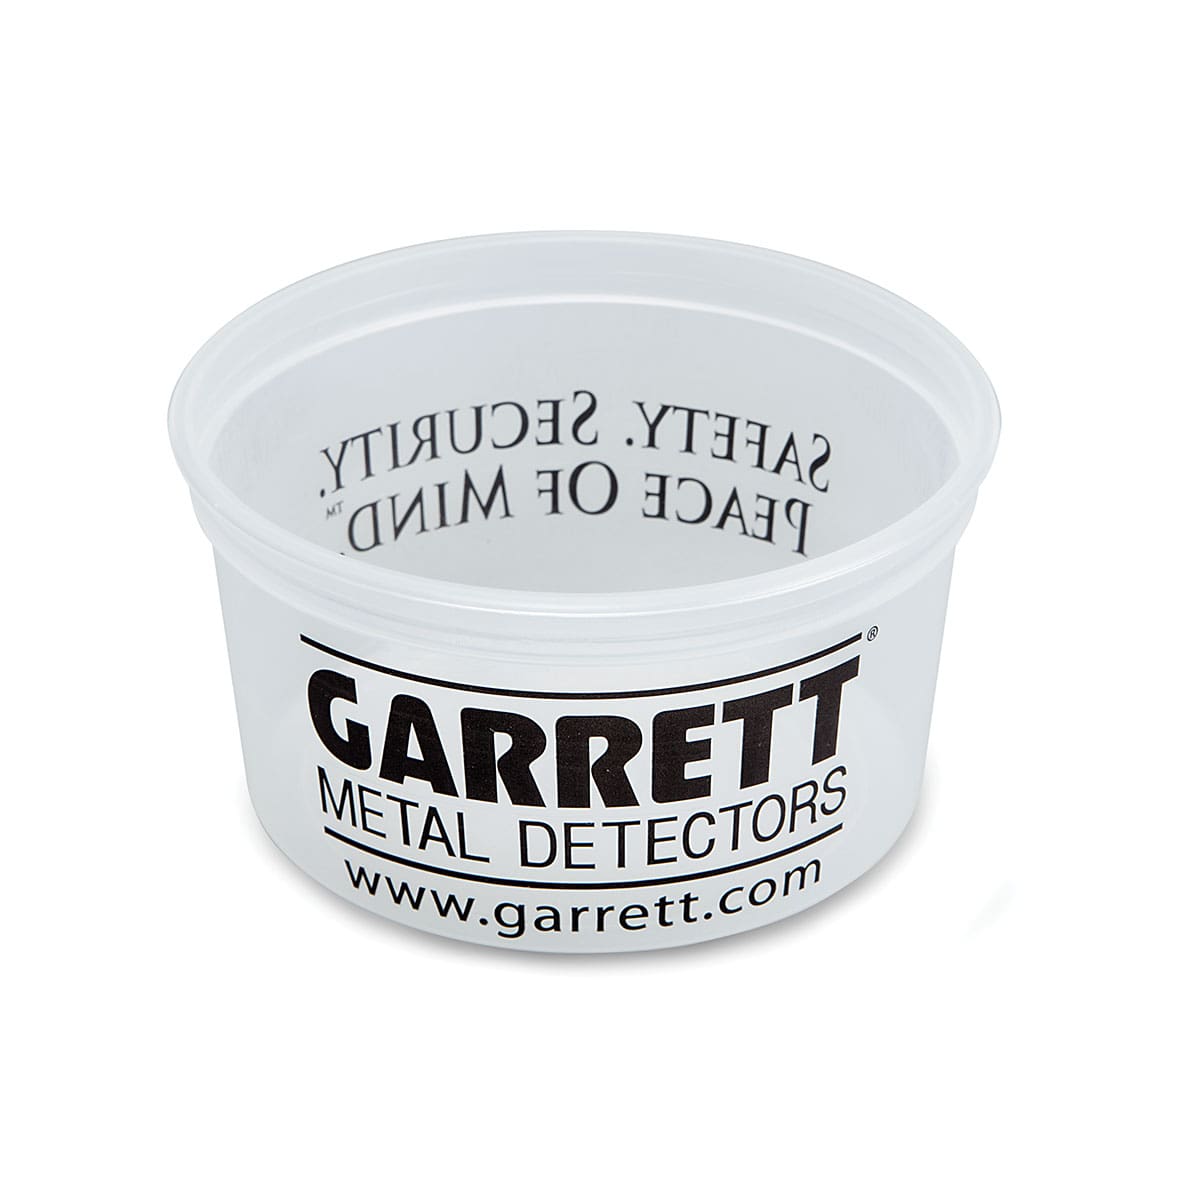 Garrett Pocket Item Container